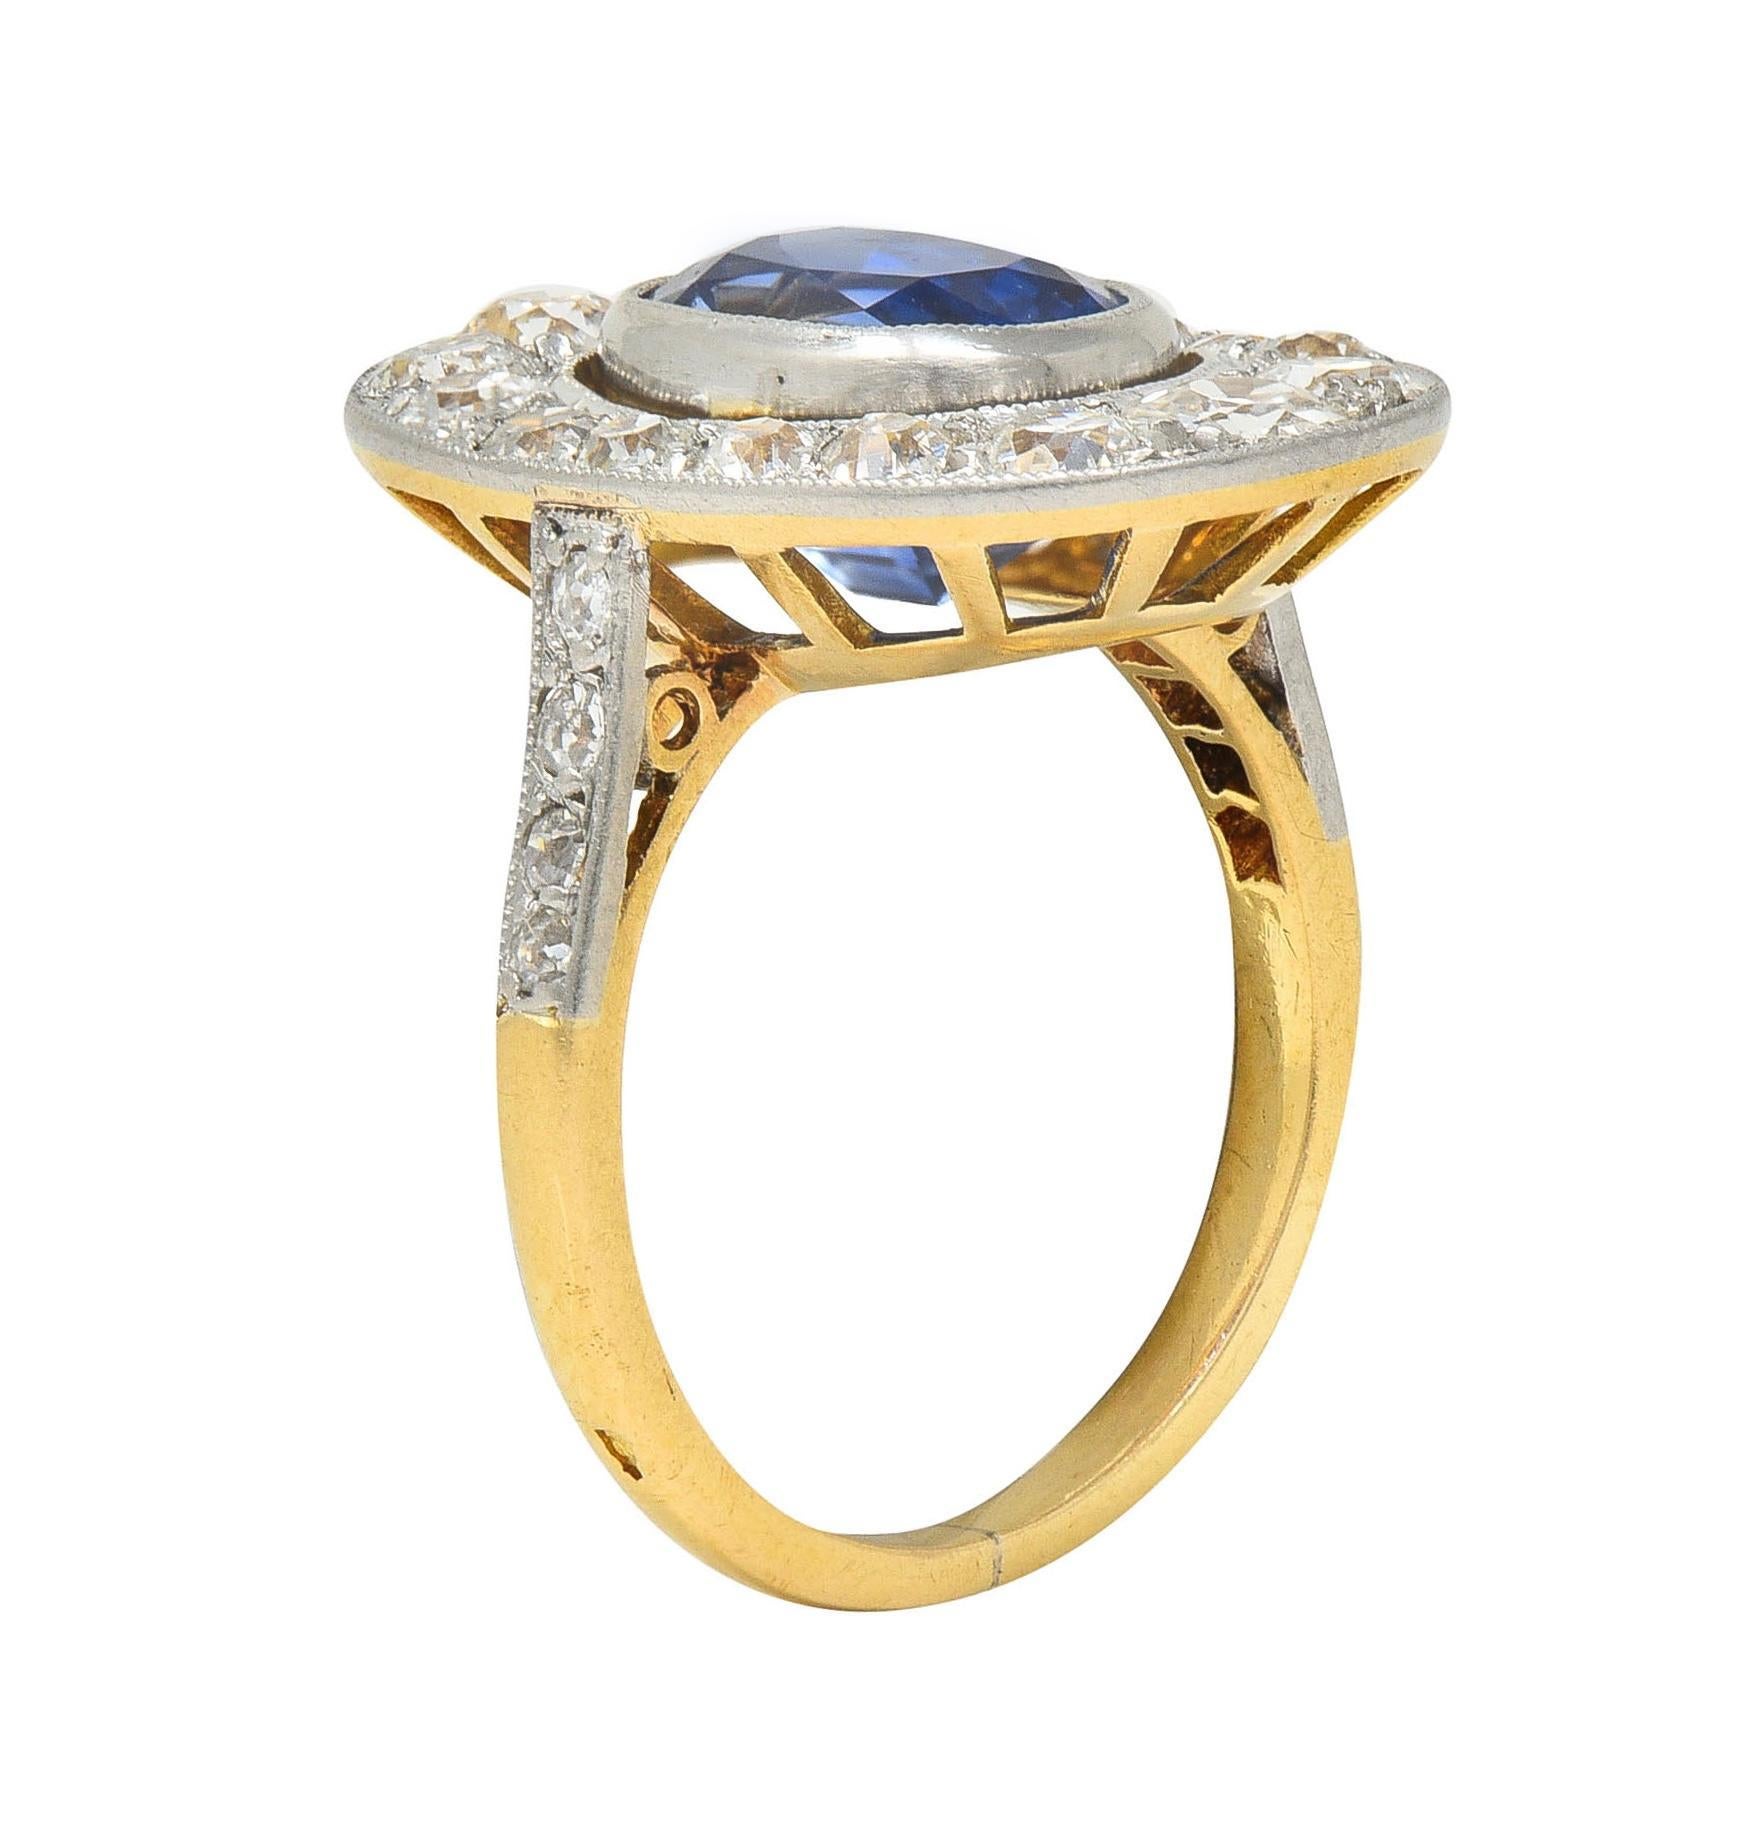 Mixed Cut French Edwardian No Heat Ceylon Sapphire Diamond Platinum 18K Gold Antique Ring For Sale